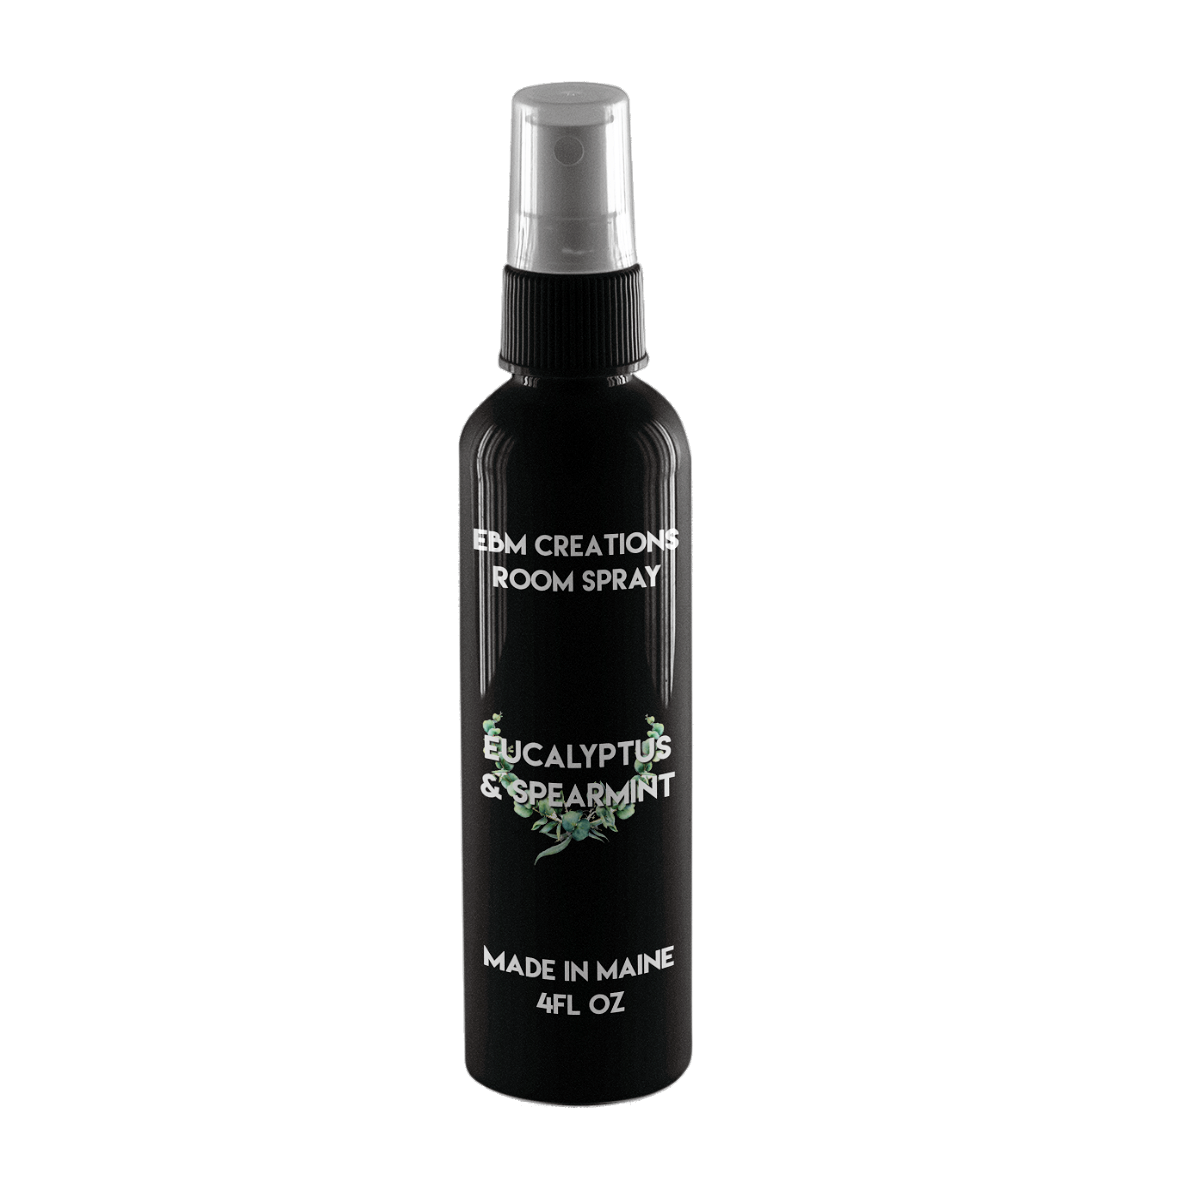 Eucalyptus & Spearmint - Room Spray 4oz Bottle